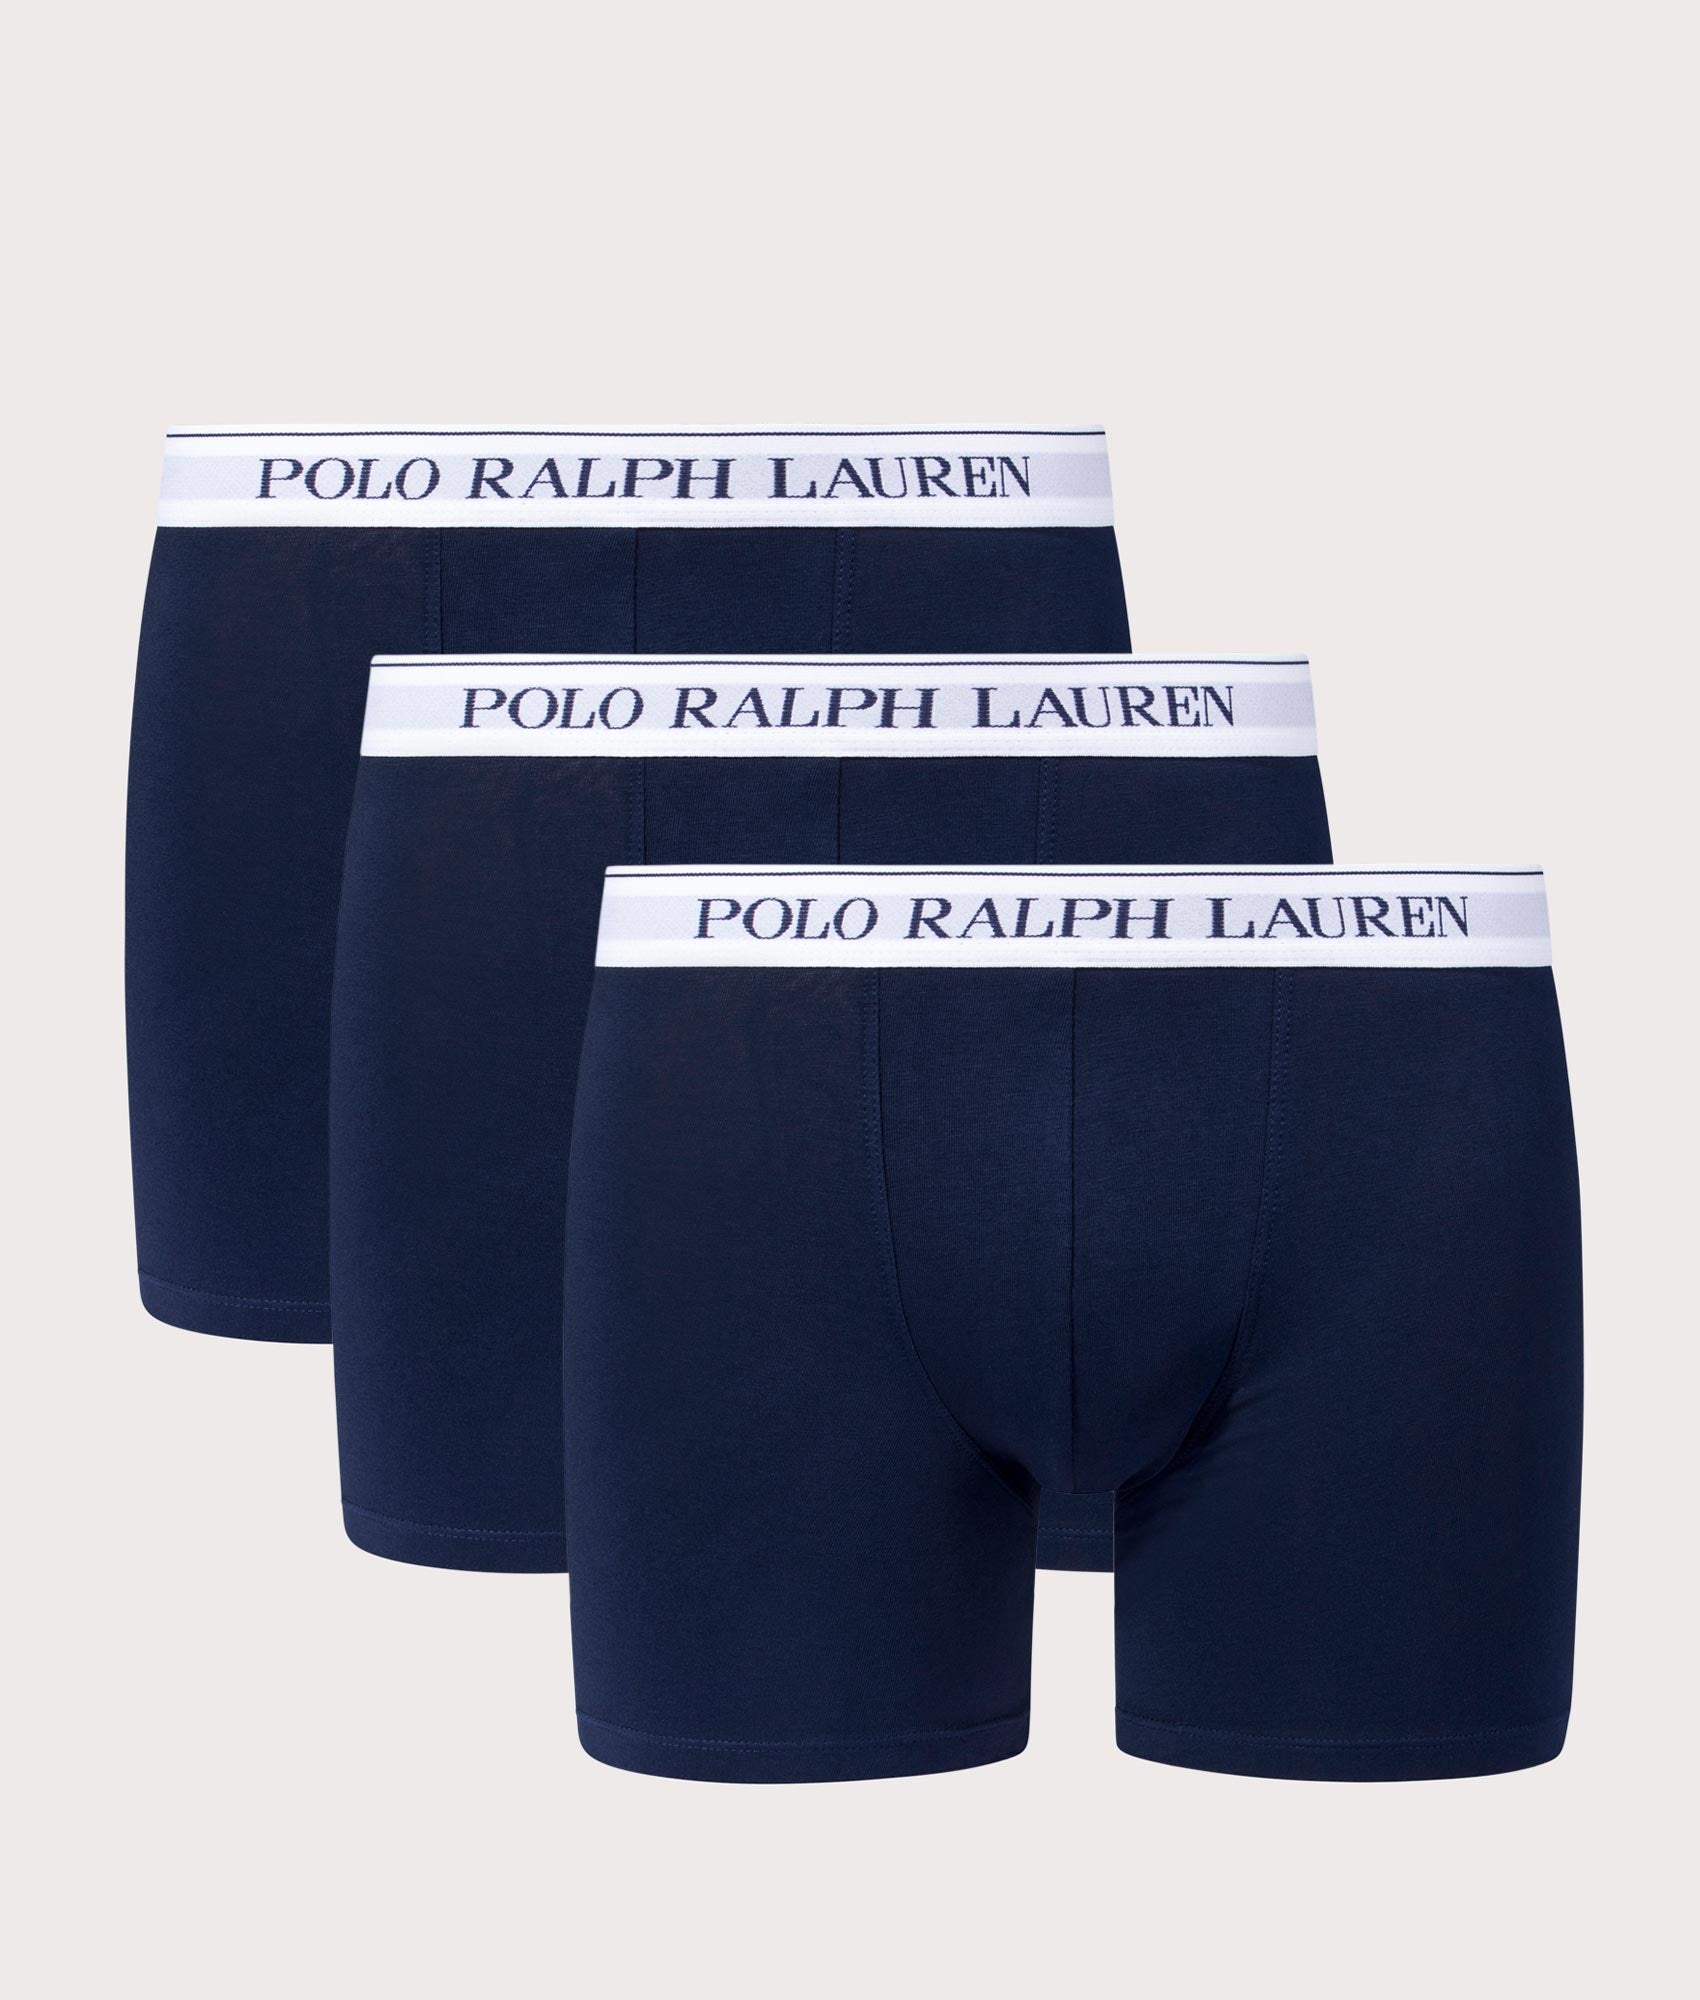 Polo Ralph Lauren Mens Three Pack of Stretch Cotton Boxer Briefs - Colour: 035 3PK Navy White/Navy W